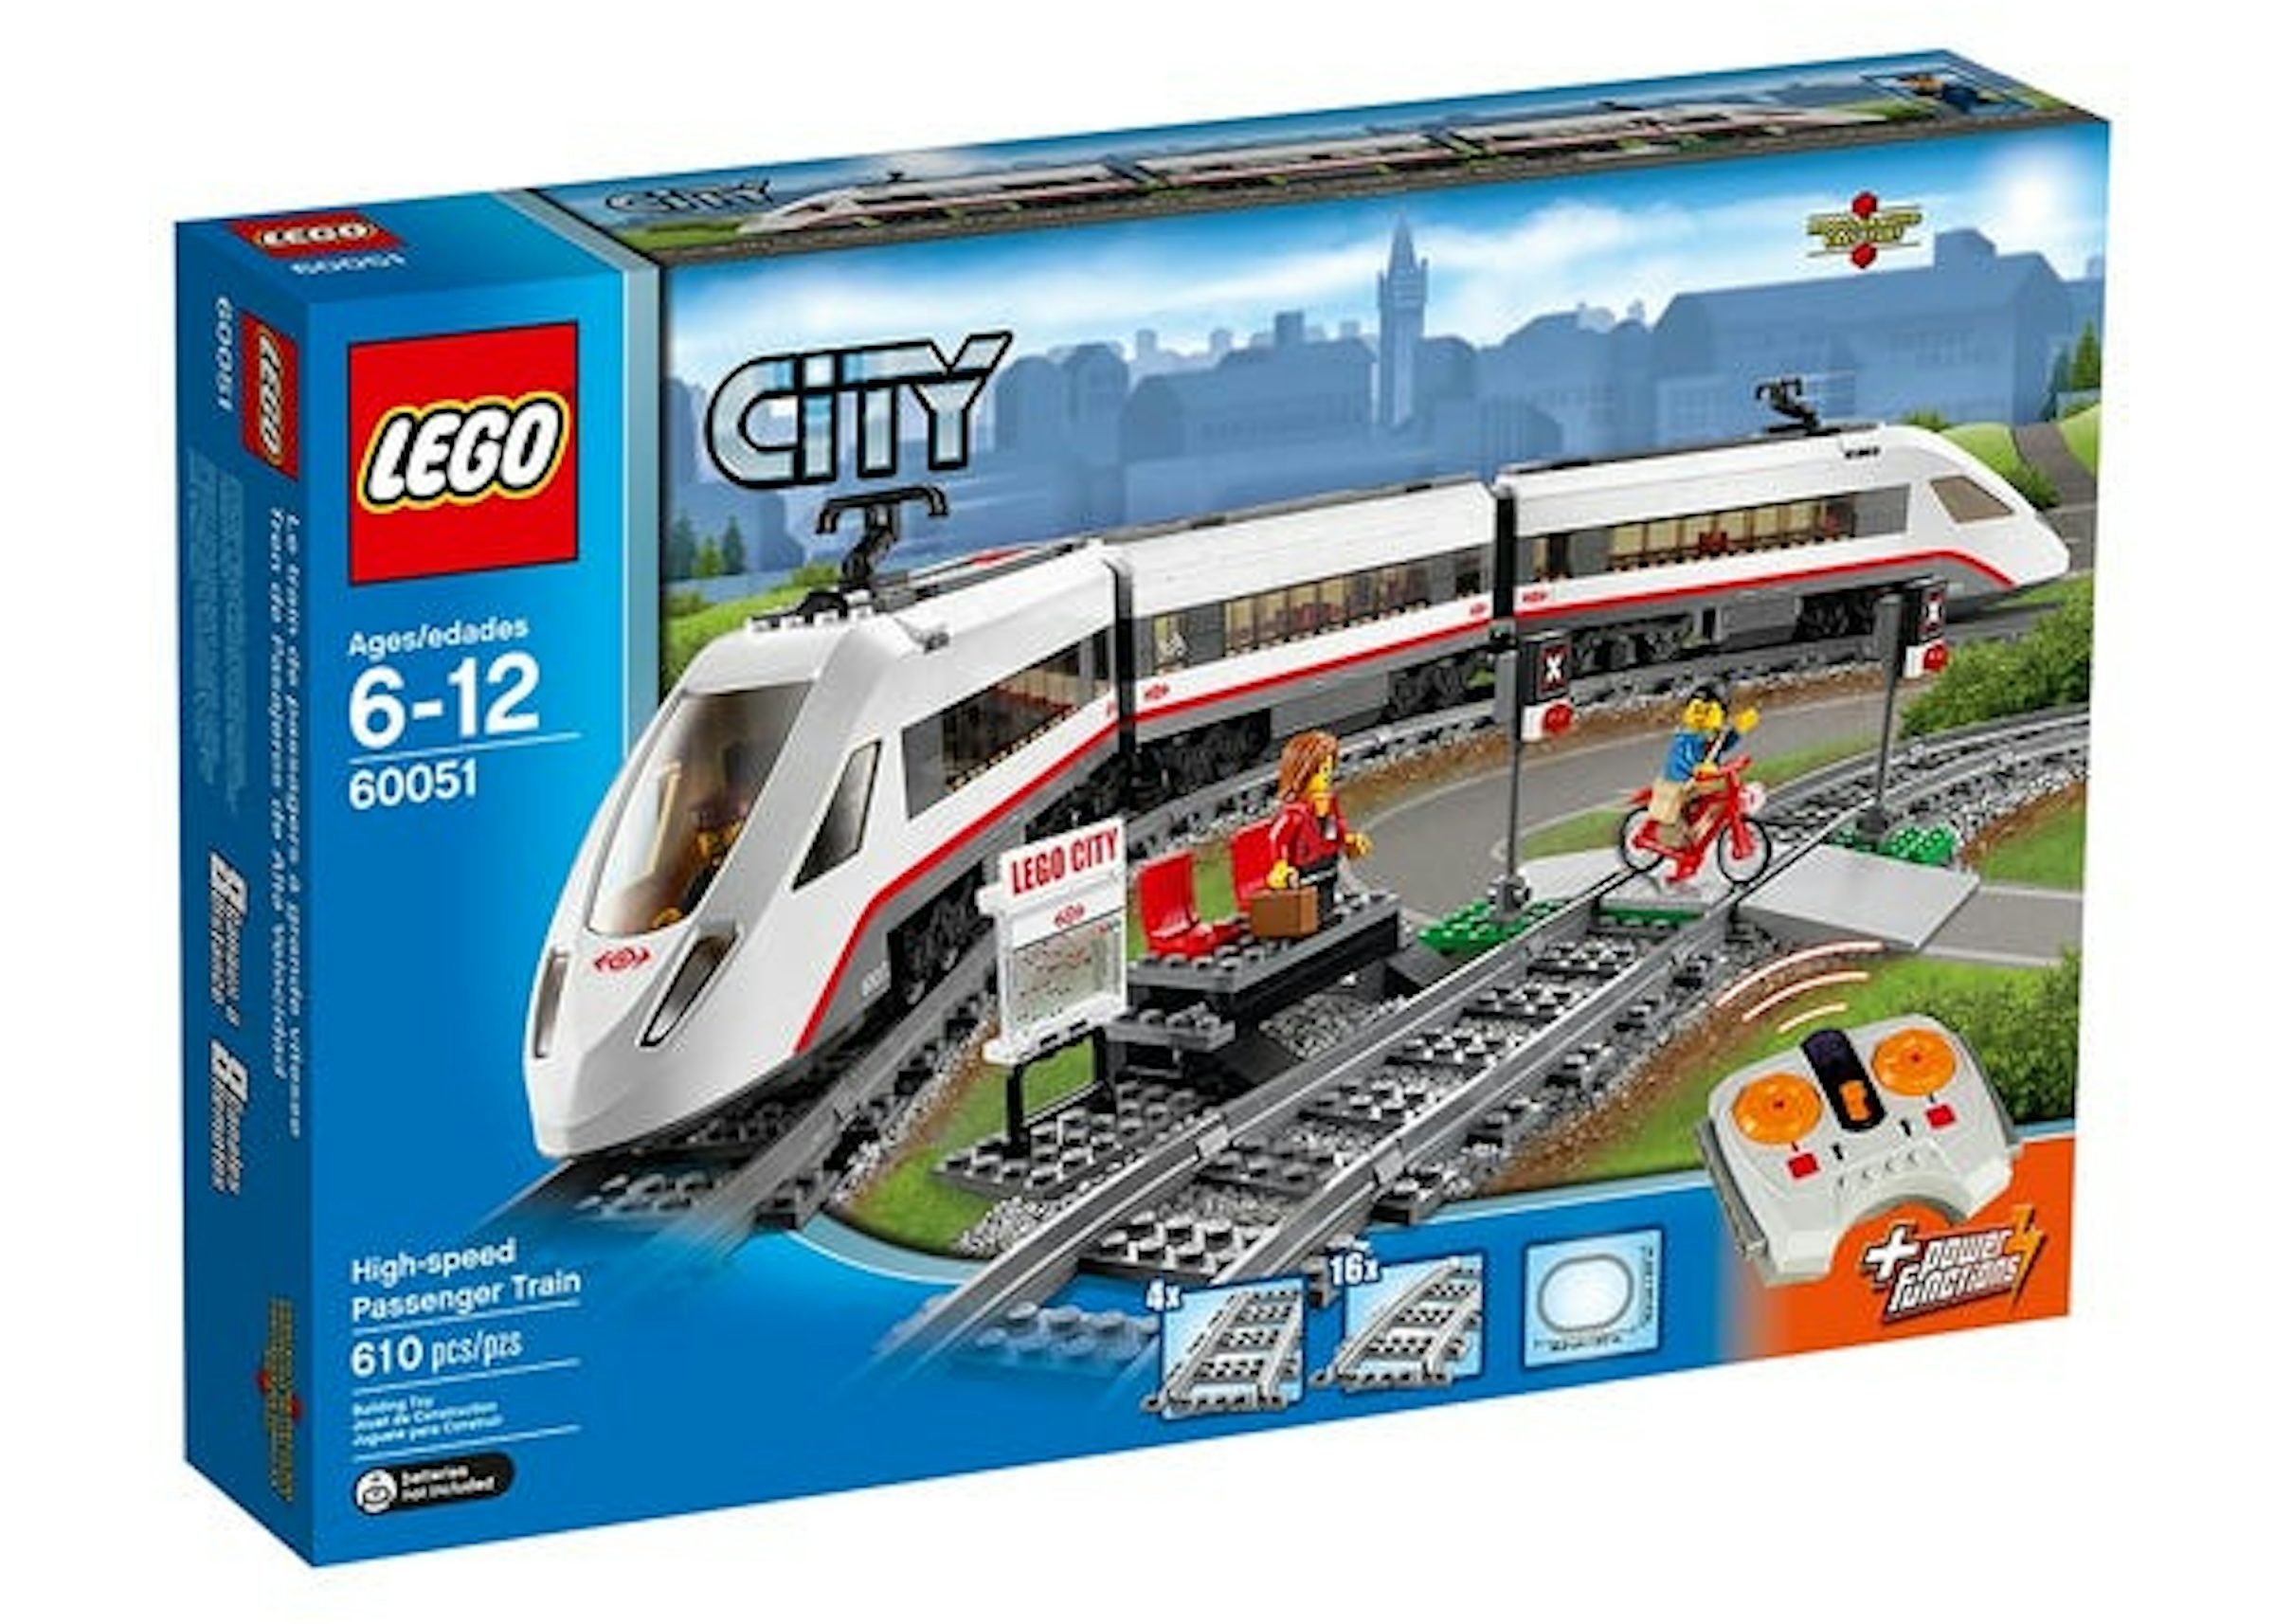 LEGO City High-speed Passenger Train Set 60051 - US